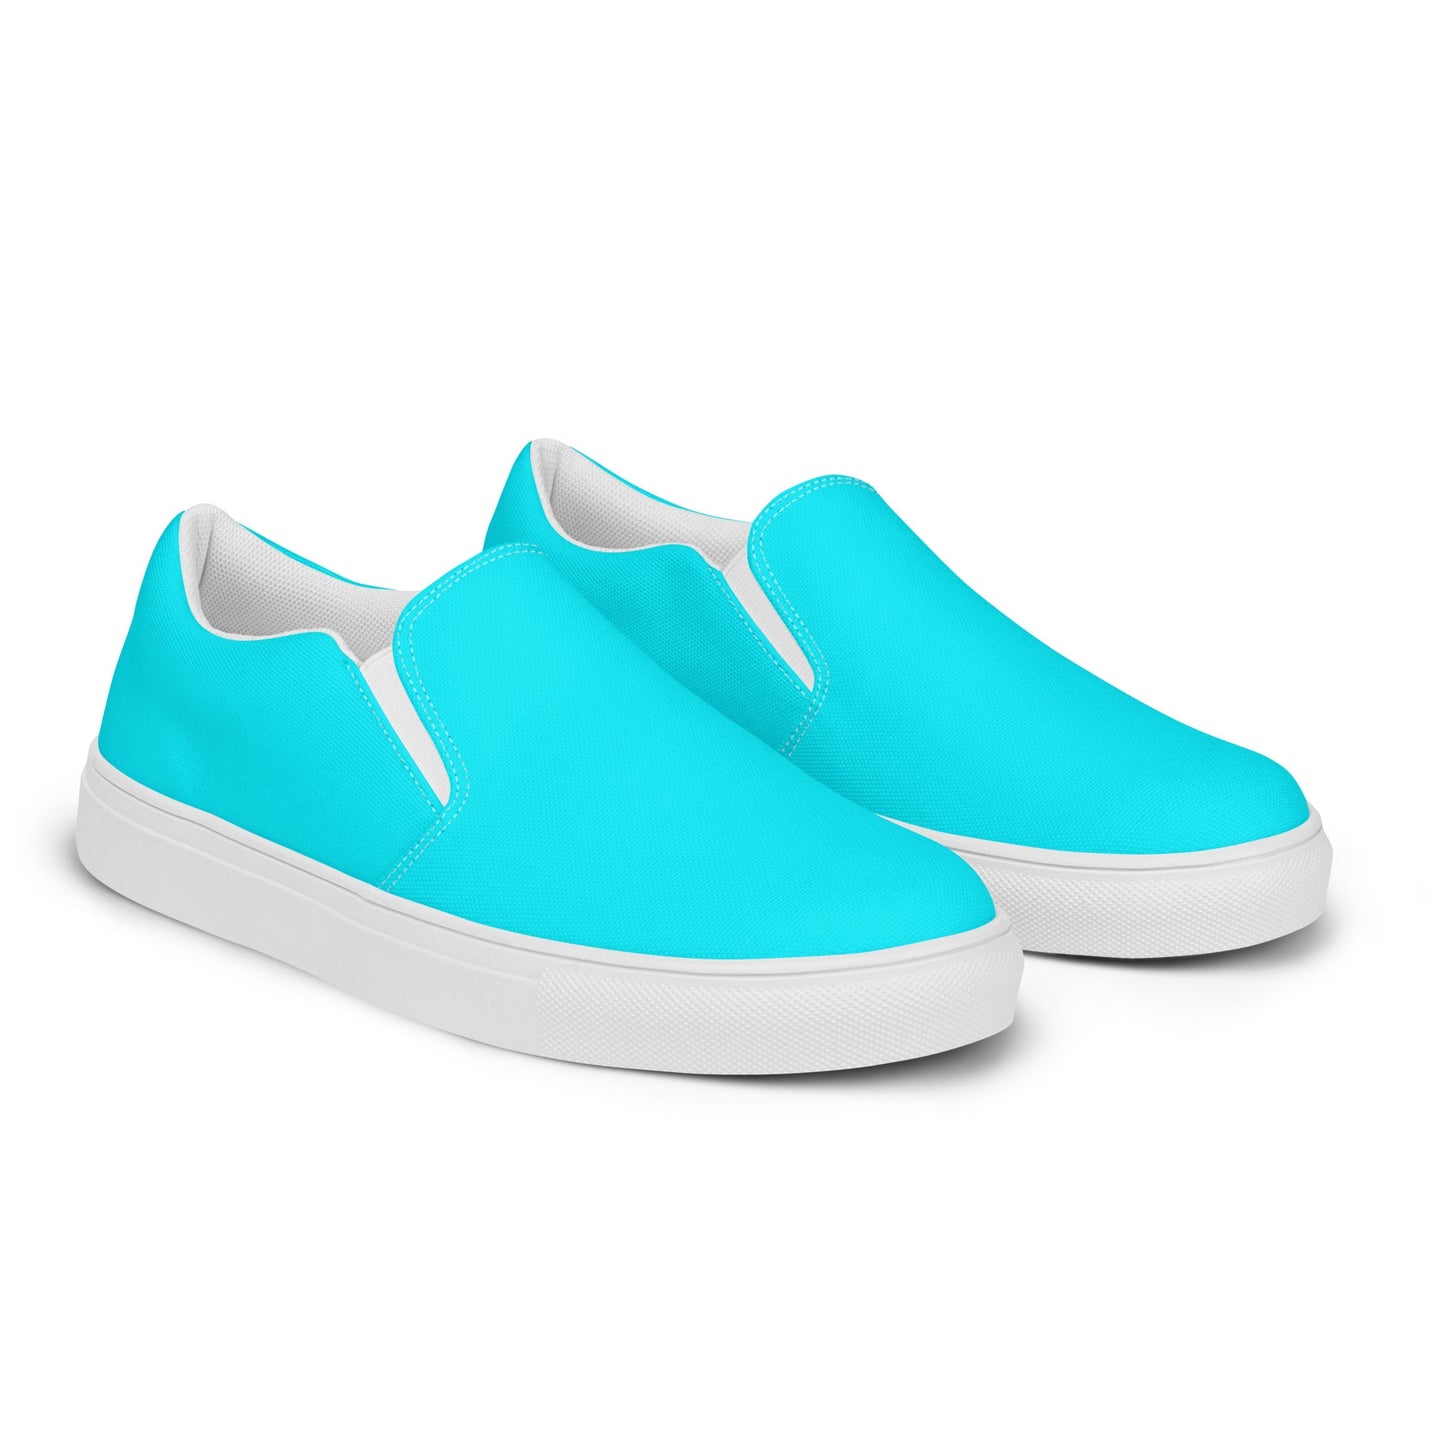 klasneakers Men’s slip-on canvas shoes - Cool Pool Aqua Blue